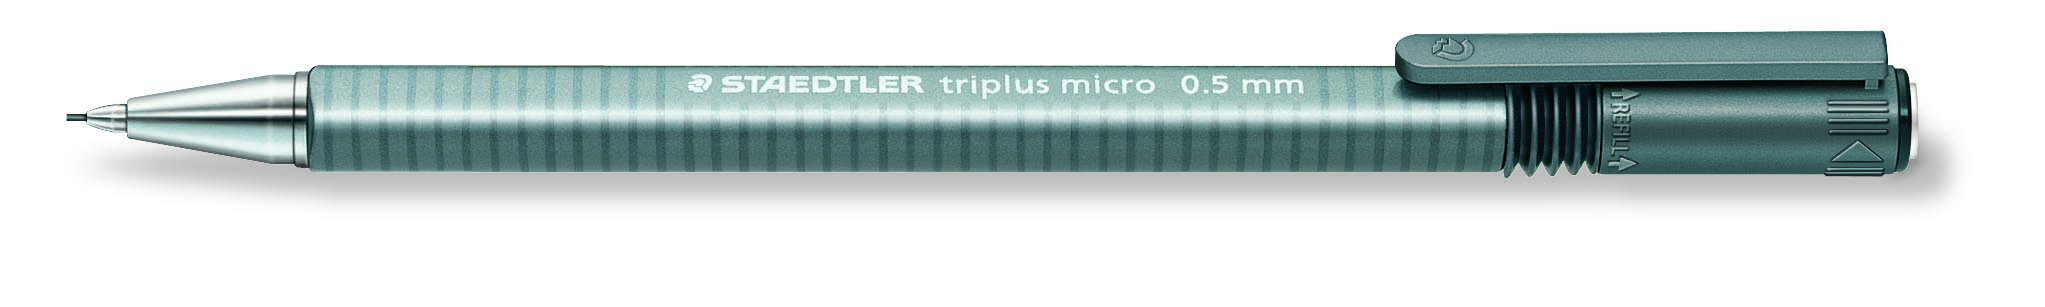 Stiftblyant Triplus Micro 0,5mm gr, Staedtler 774 25,10stk